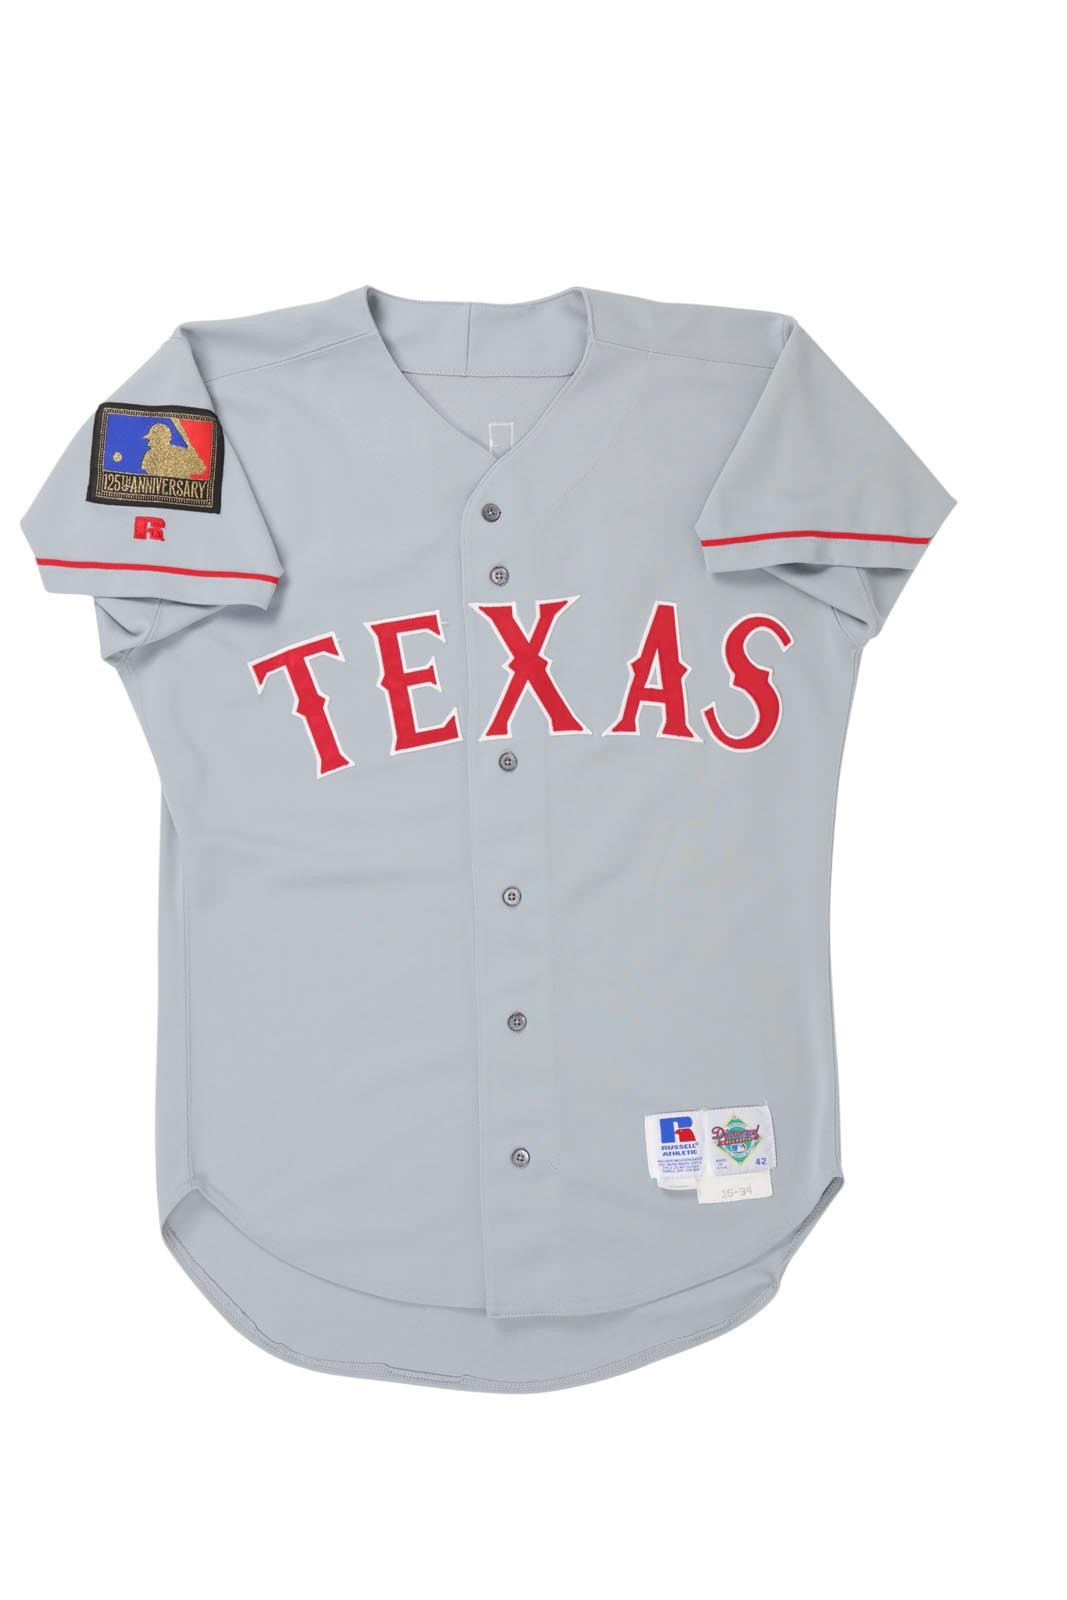 Baseball Equipment - 1994 David Hulse Texas Rangers Game Worn Jersey - 125th Anniversary Patch